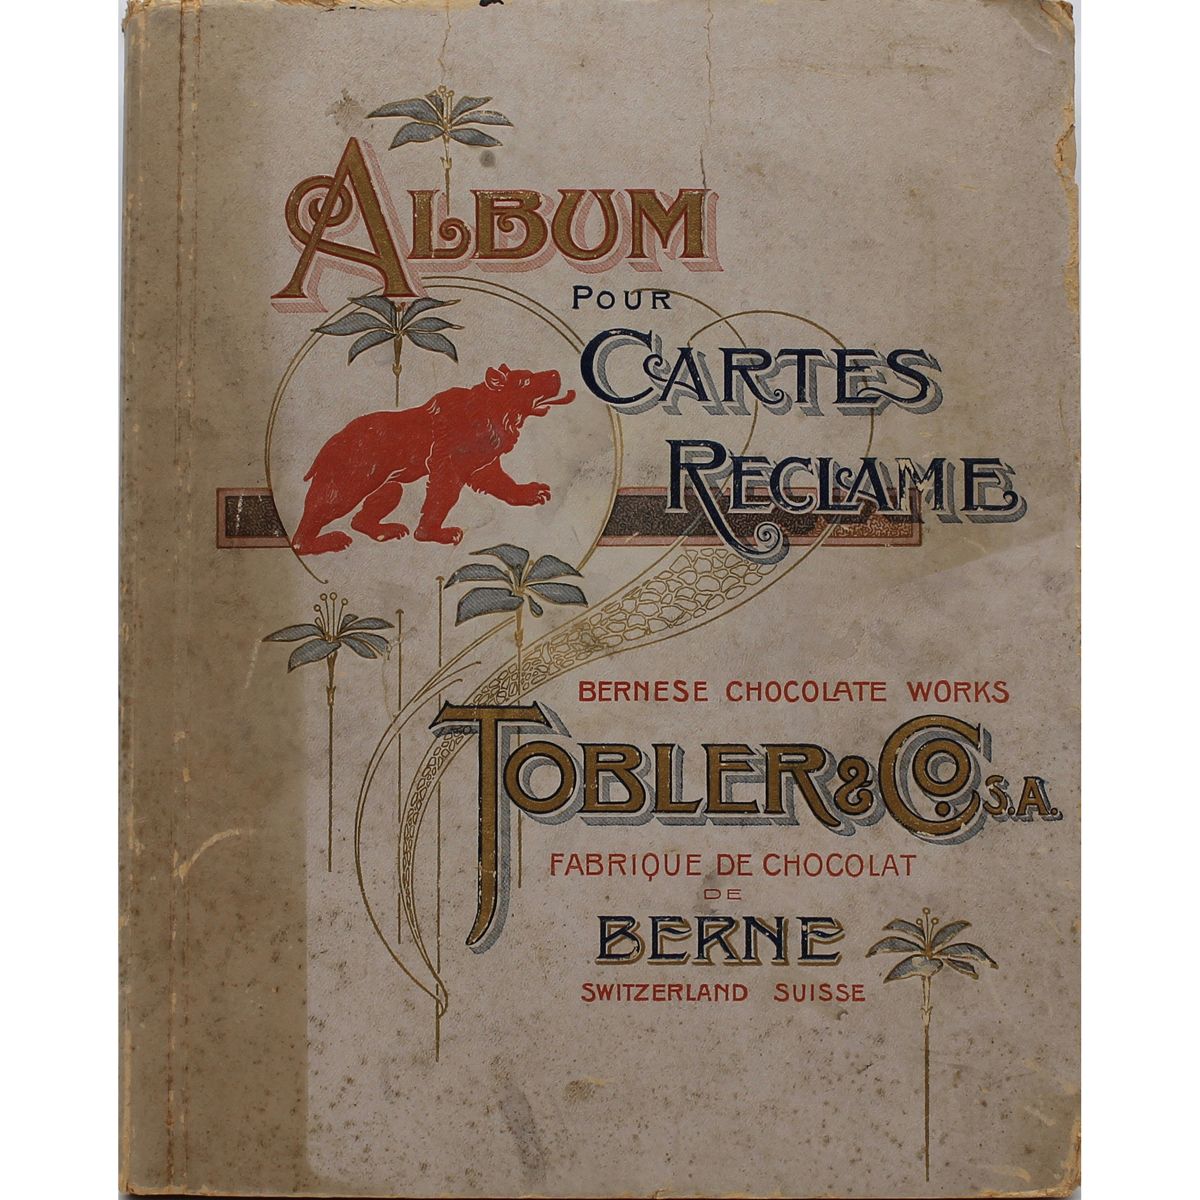 ALBUM POUR CARTES RECLAME "Tobler & Co." Inizi secolo XX
Early 20th century